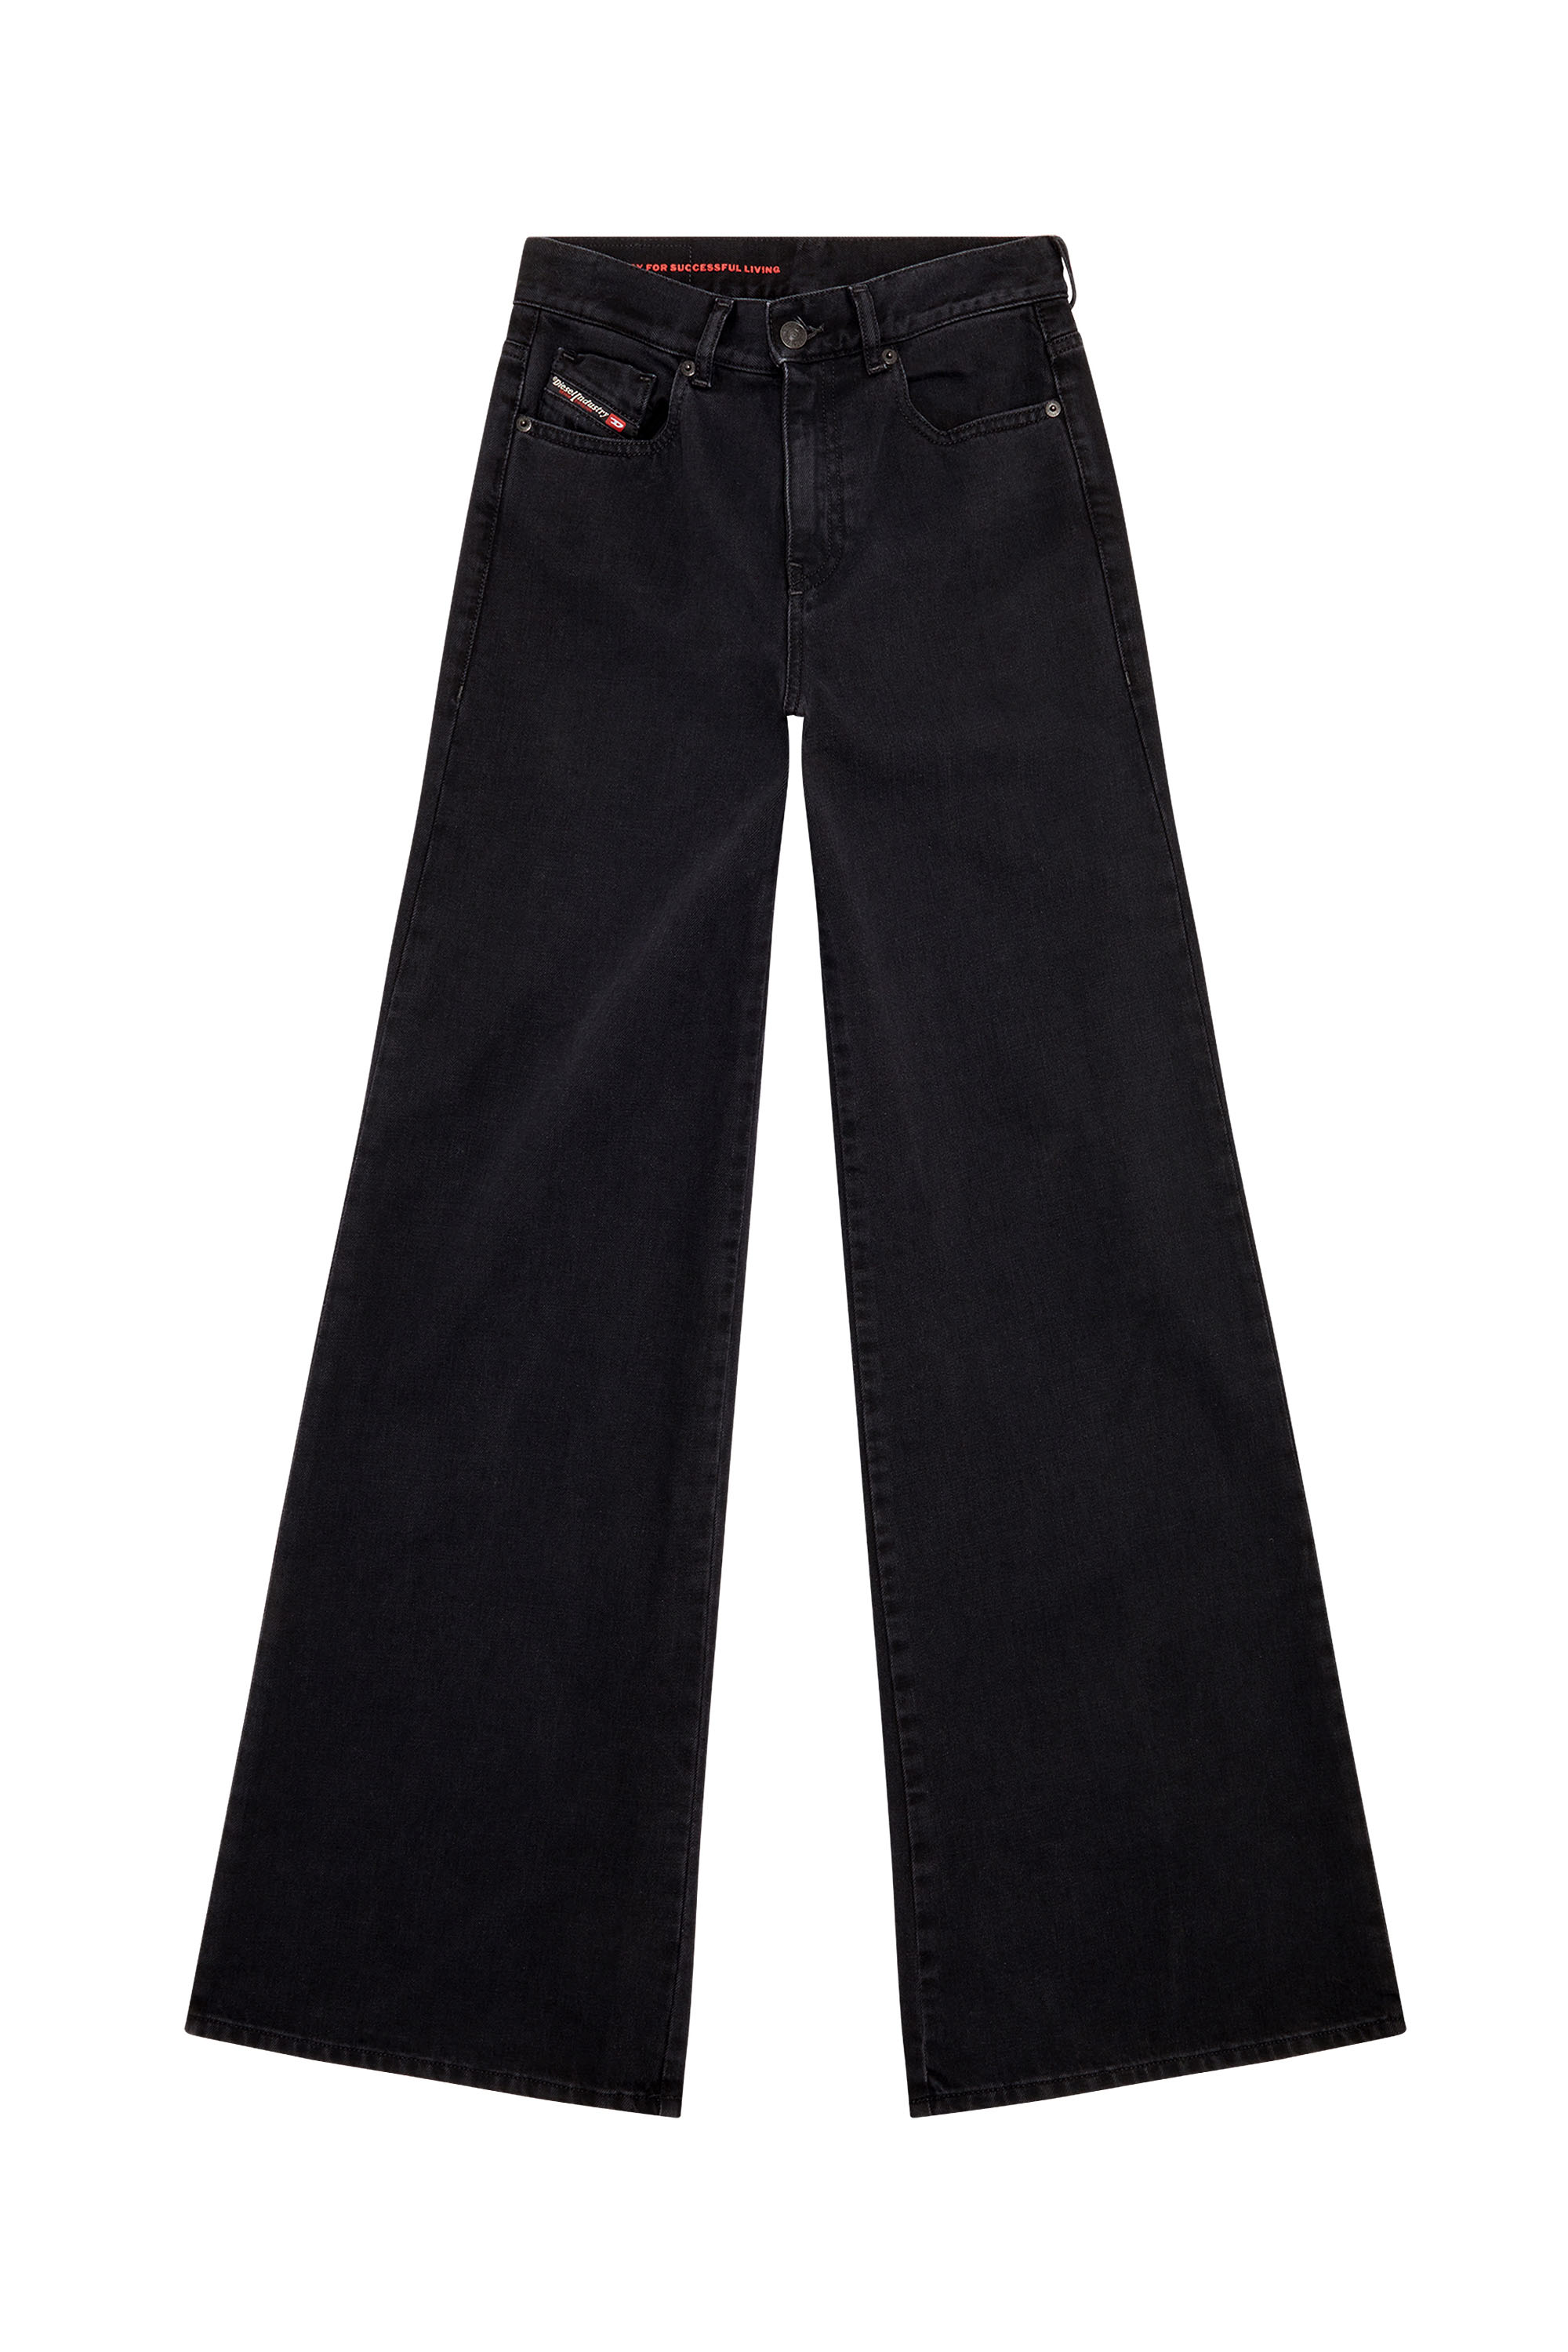 1978 D-AKEMI Z09RL Bootcut and Flare Jeans, Black/Dark grey - Jeans